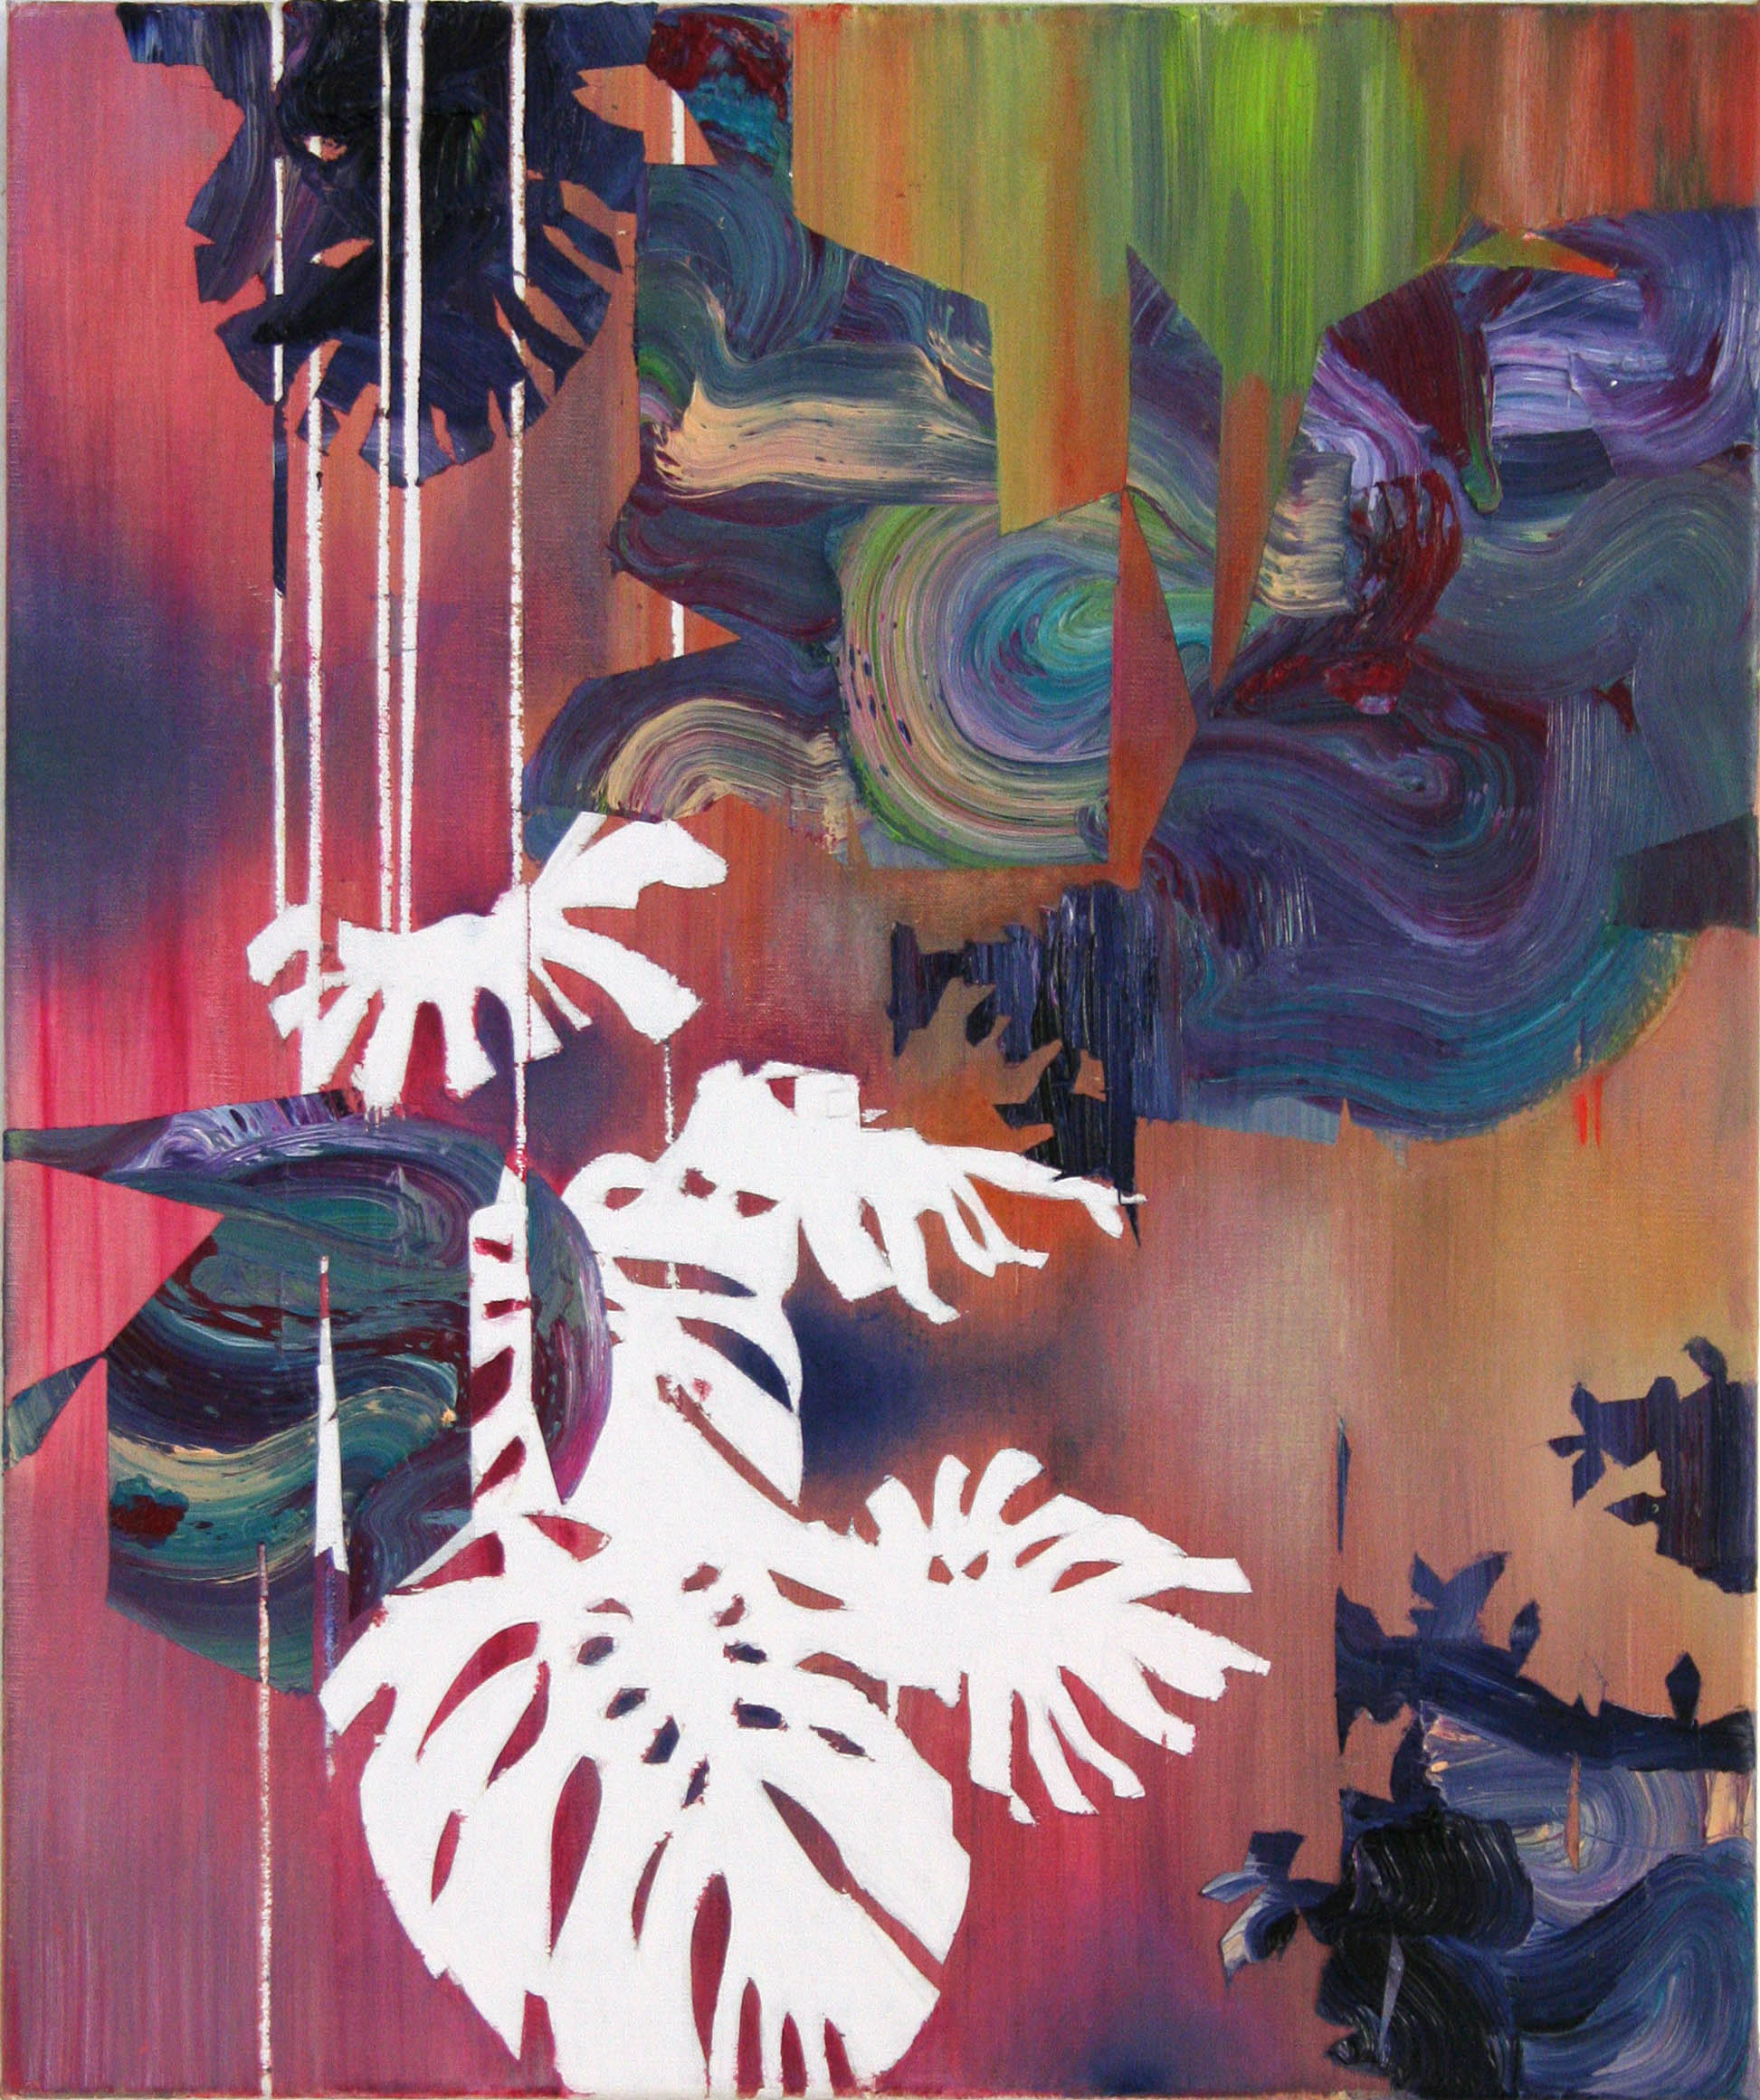   Jungle Boogie Woogie  oil on canvas 60 x 50 cm, 2009 